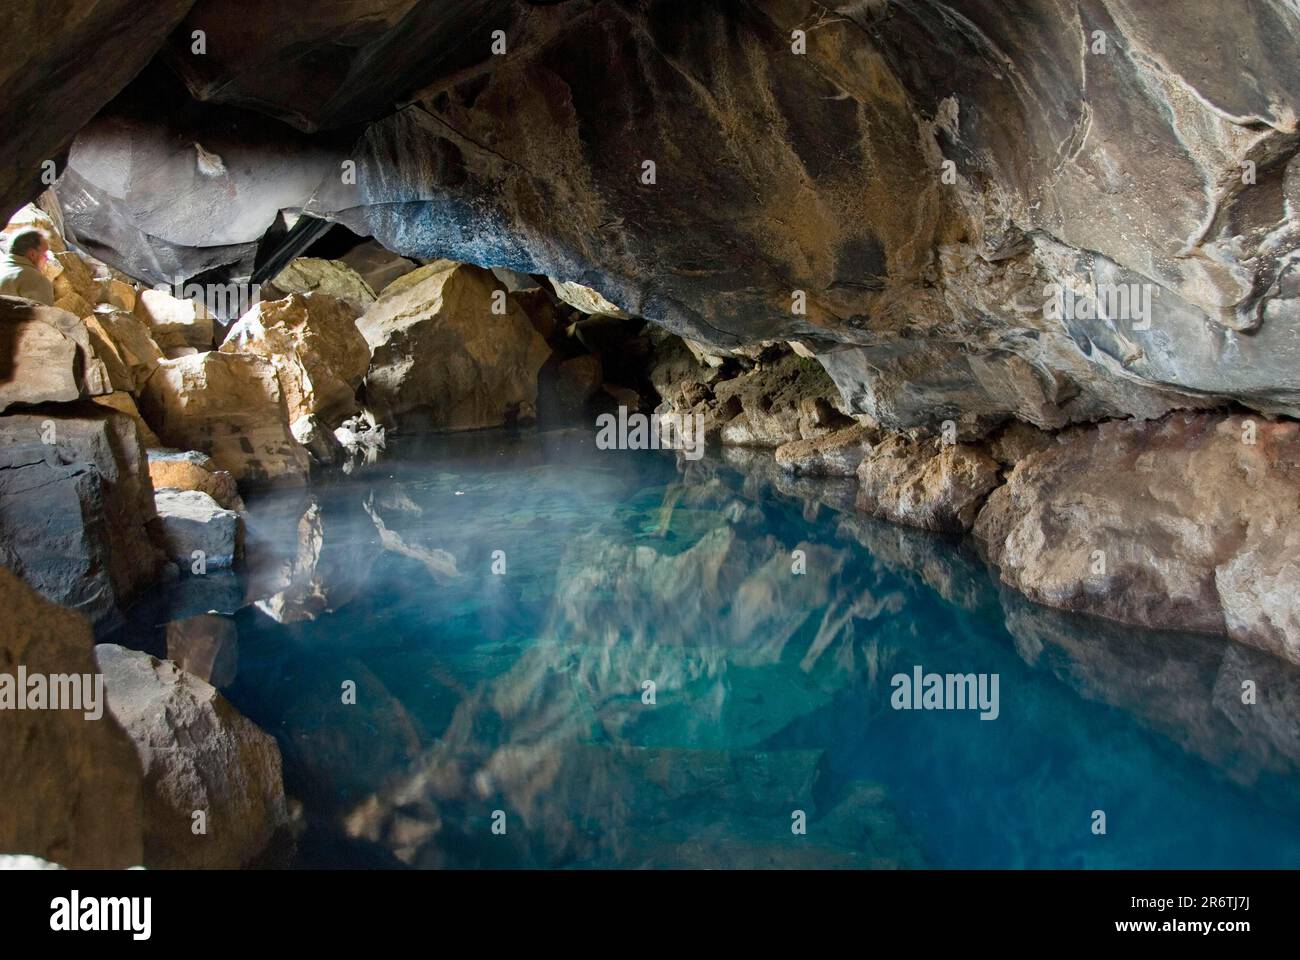 Cave, Grjotagja, near Reykjahlid on Lake Myvatn, Iceland Stock Photo